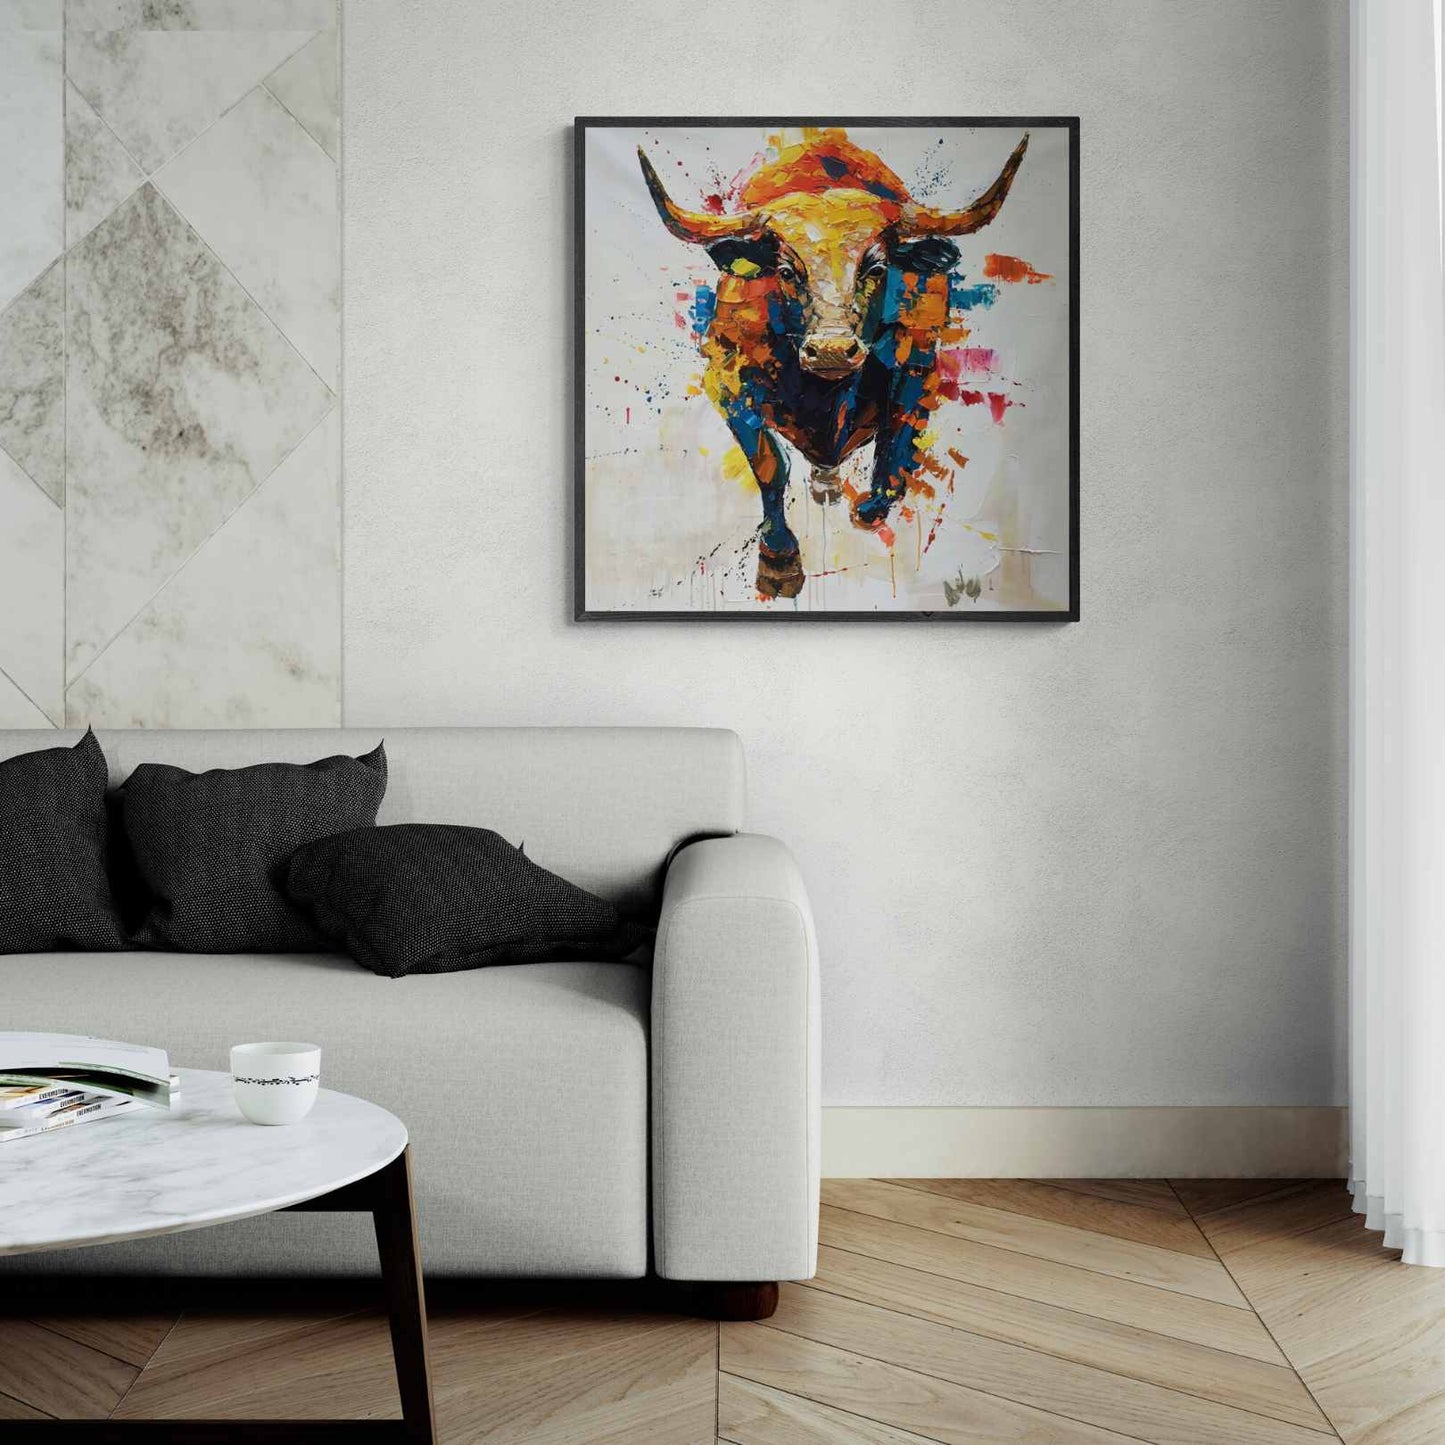 Oil Painting Bull Color 90x90 cm